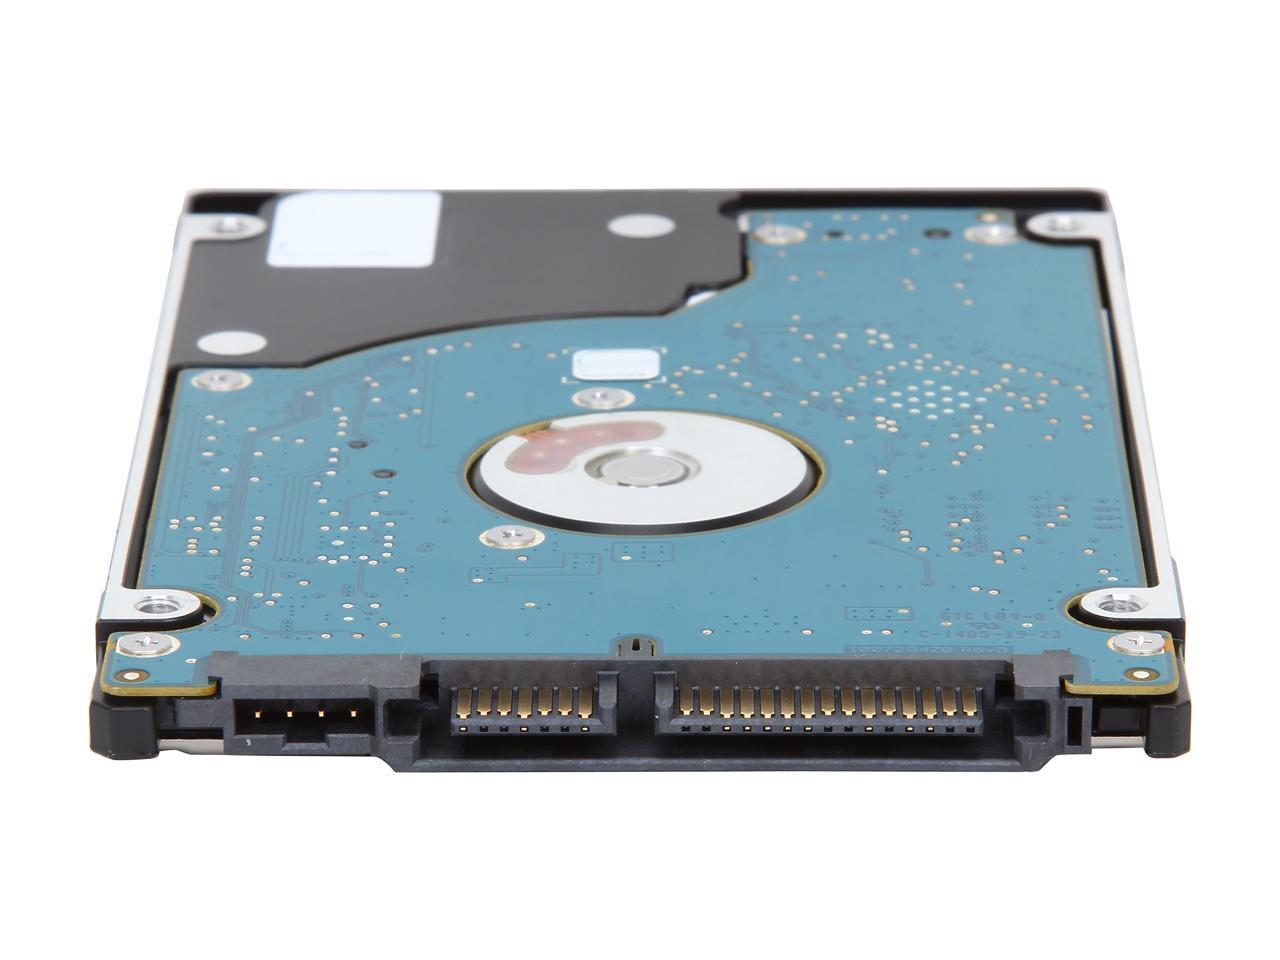 Seagate Laptop Thin ST500LM021 500GB 7200 RPM 32MB Cache SATA 6.0Gb/s 2.5" Hard Drive